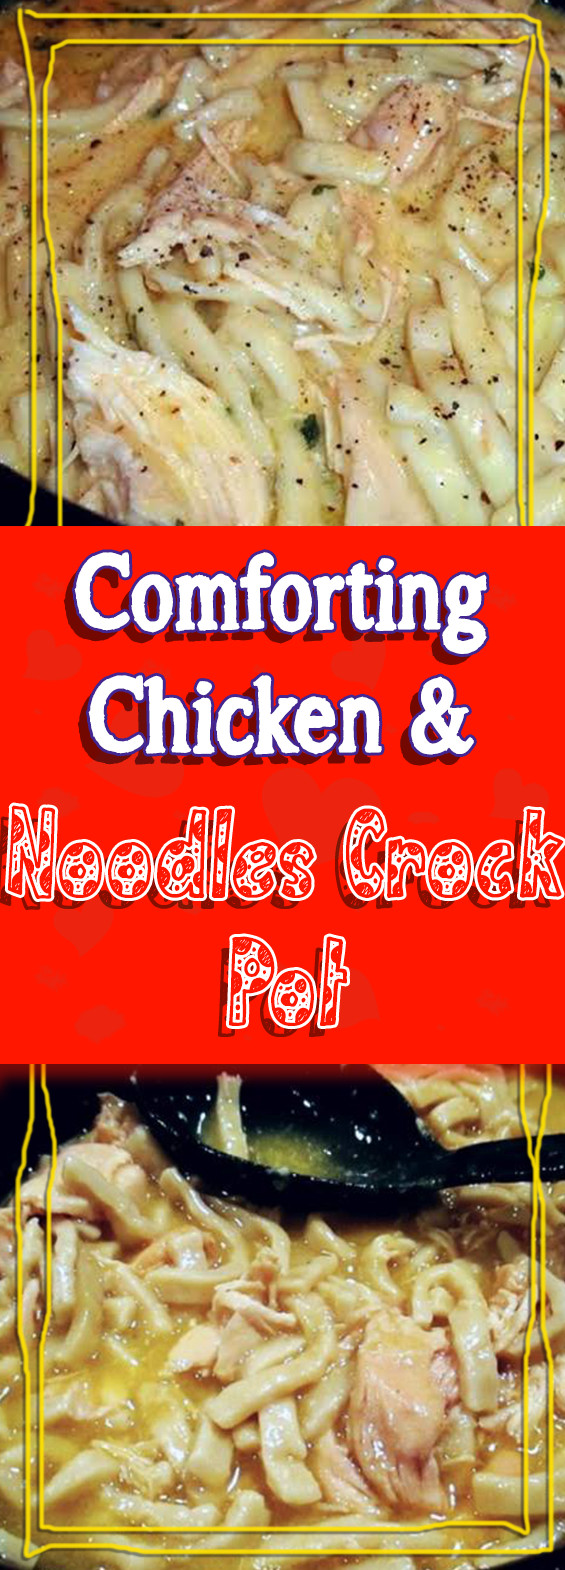 Comforting Chicken &amp; Noodles Crock Pot
 forting Chicken & Noodles Crock Pot Flavors Family